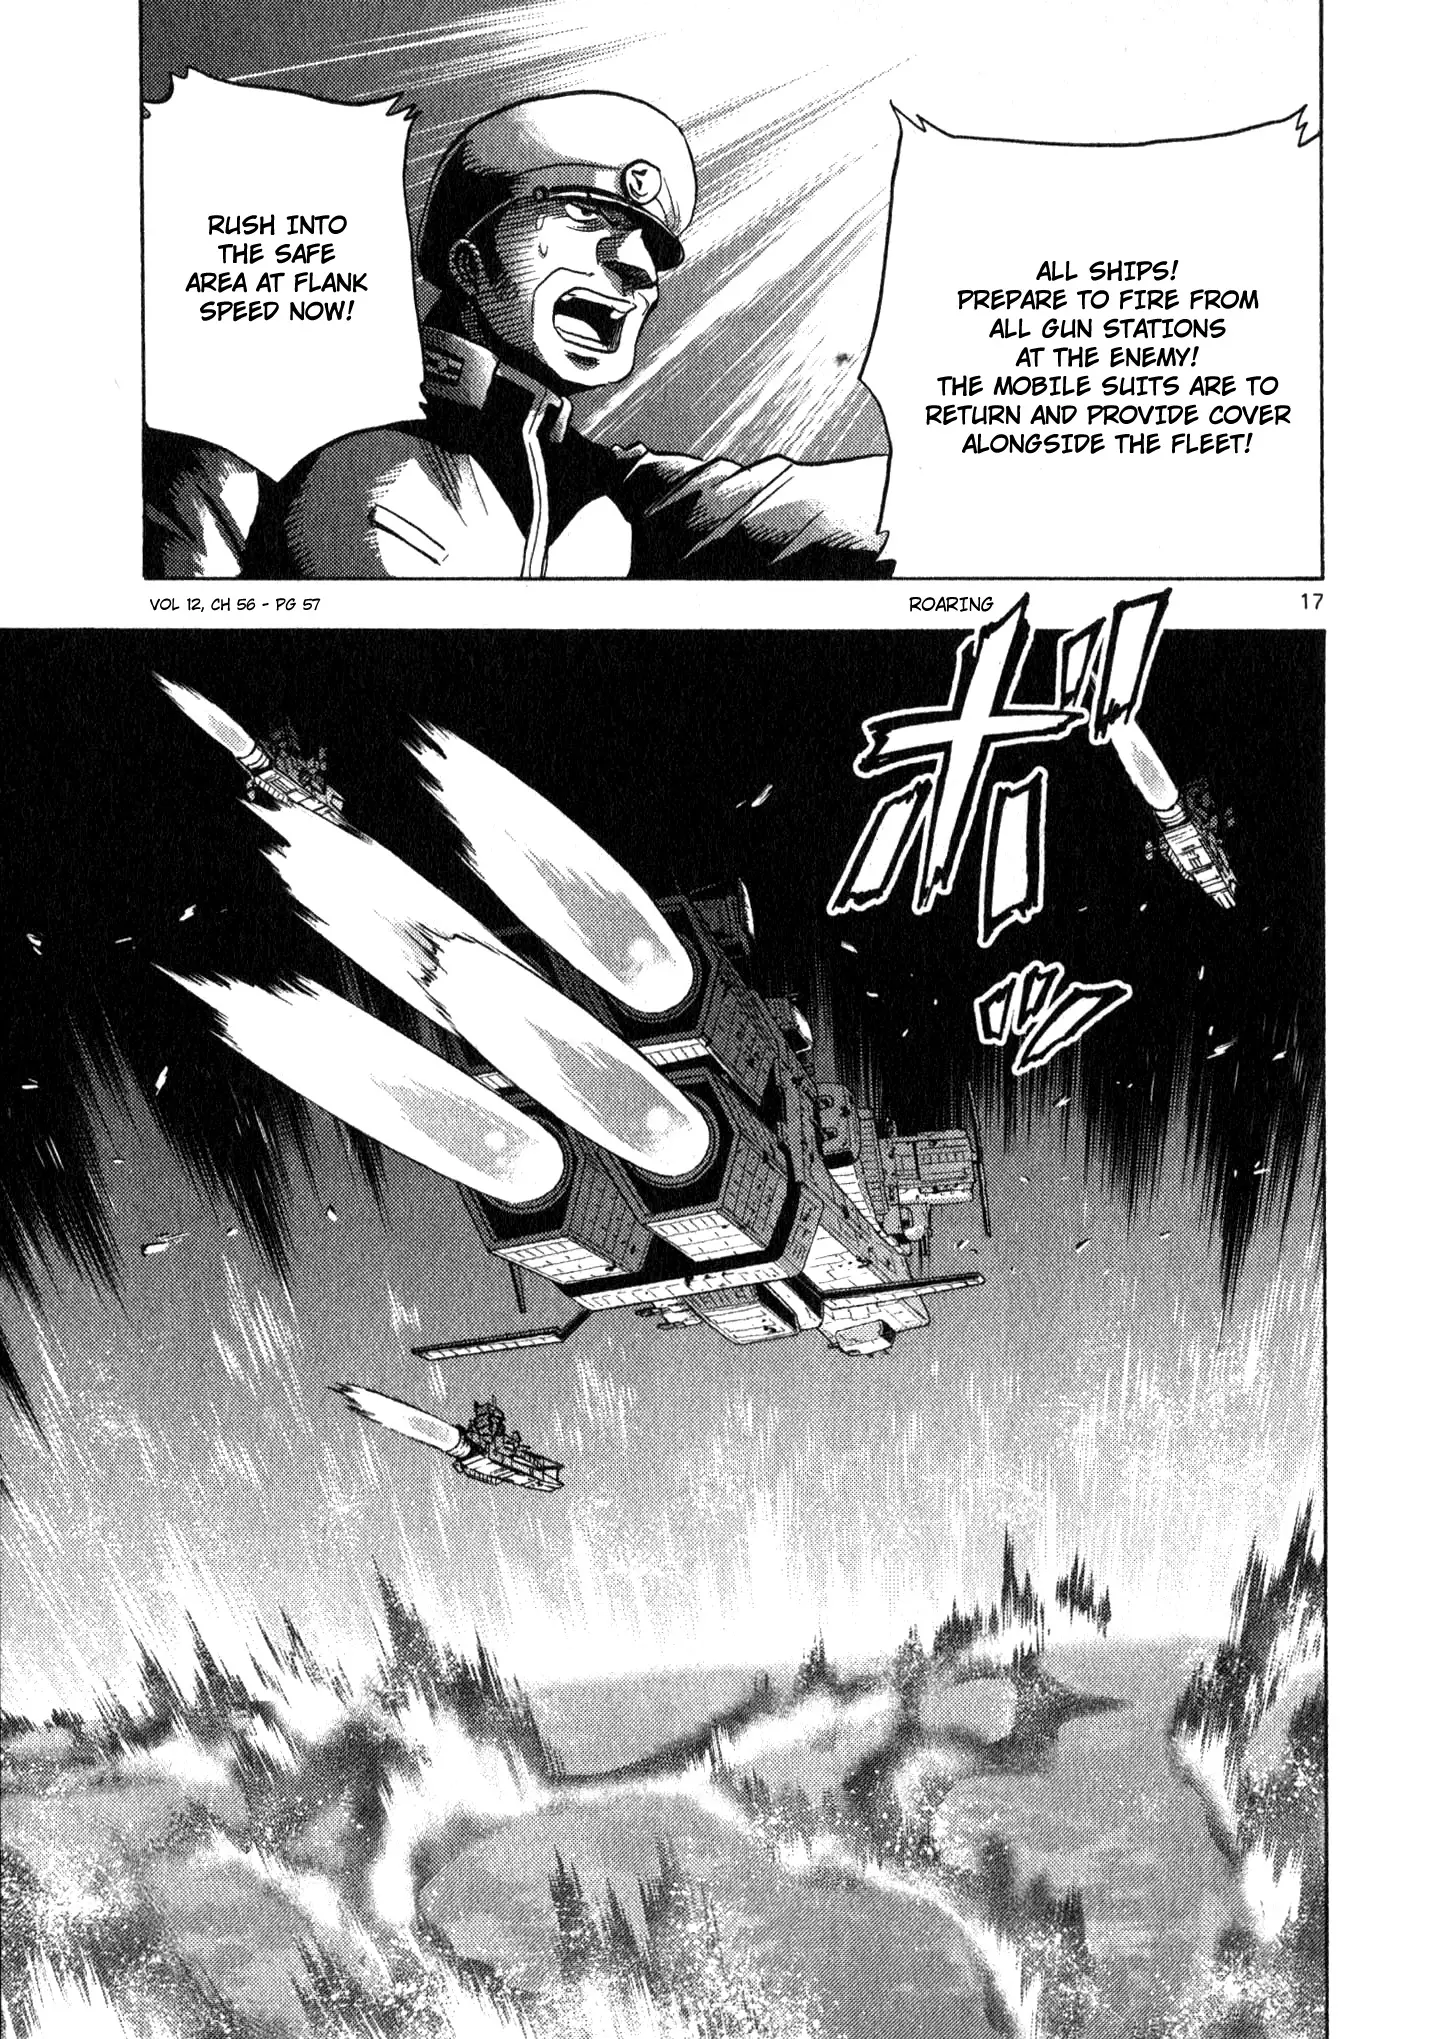 Mobile Suit Gundam Aggressor - 56 page 19-2a04a7a6